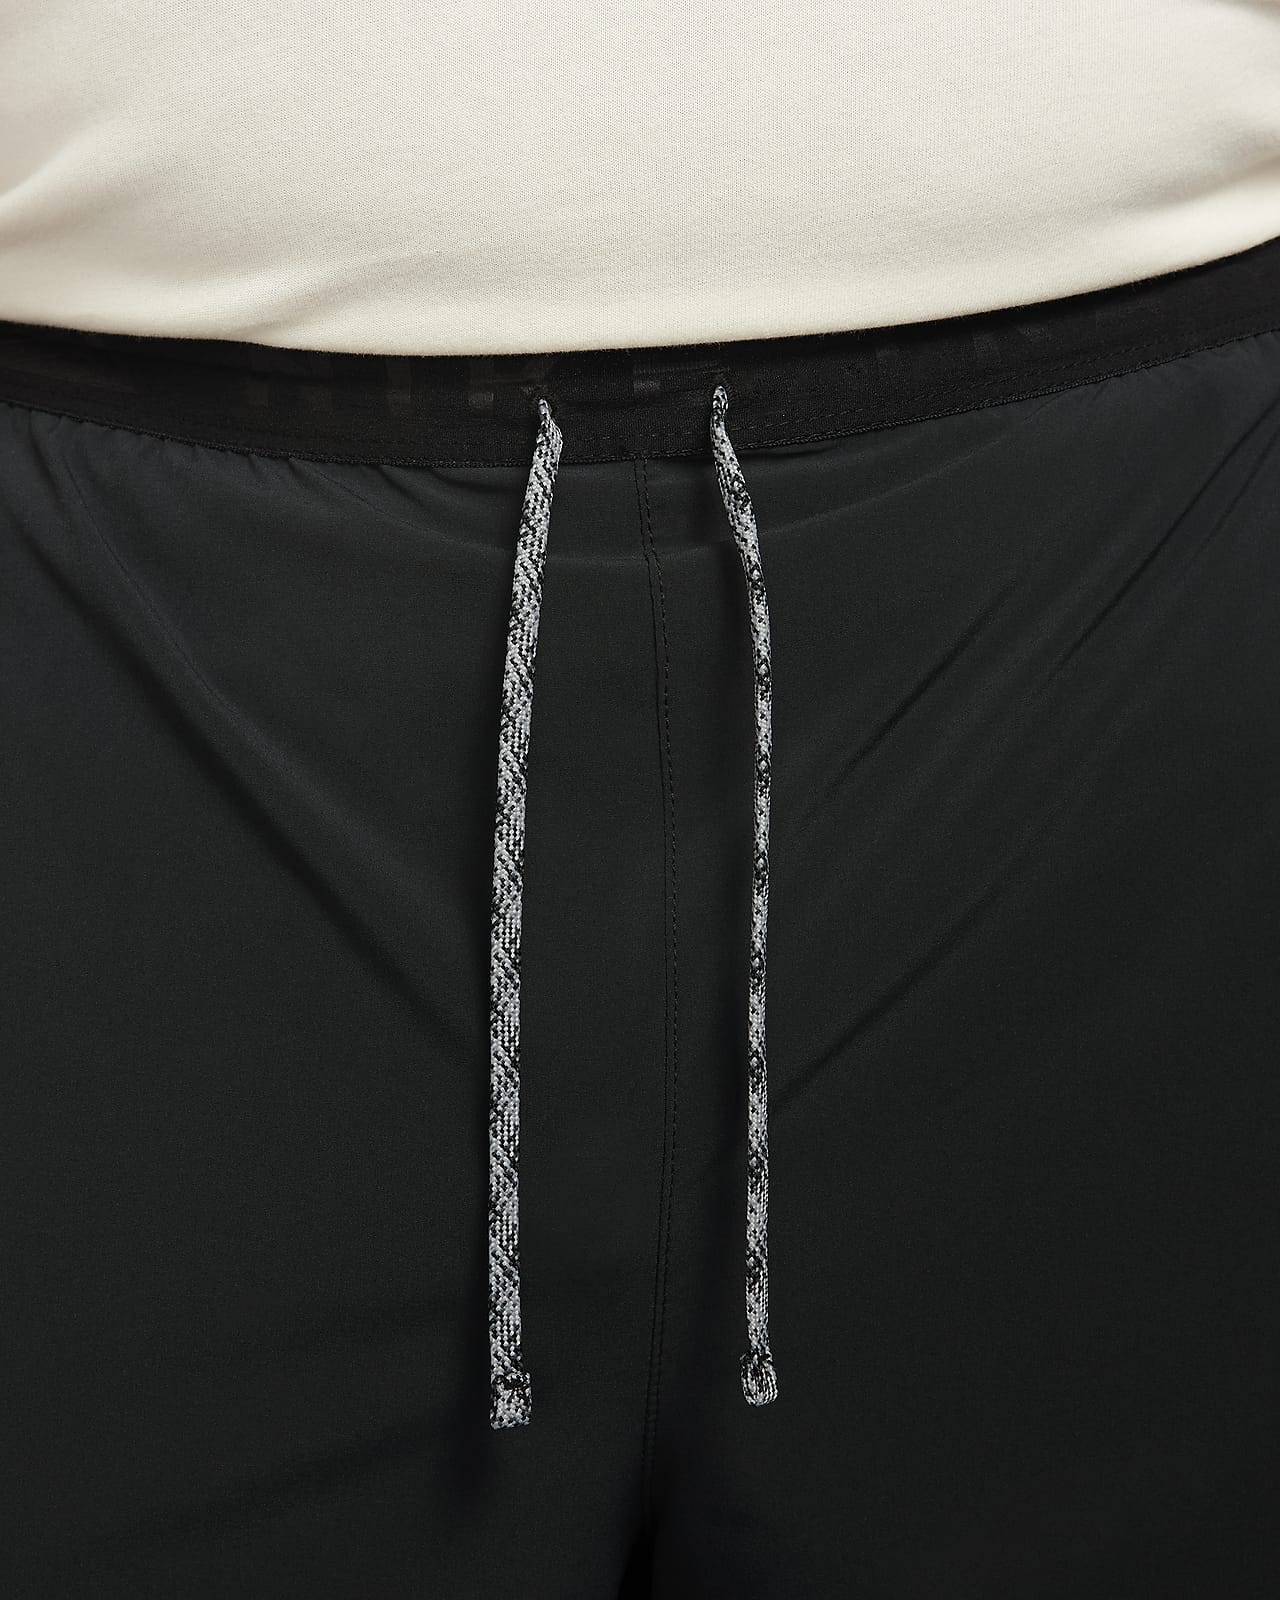 Pantalon de running Dri-FIT Nike Trail Dawn Range pour homme. Nike CA